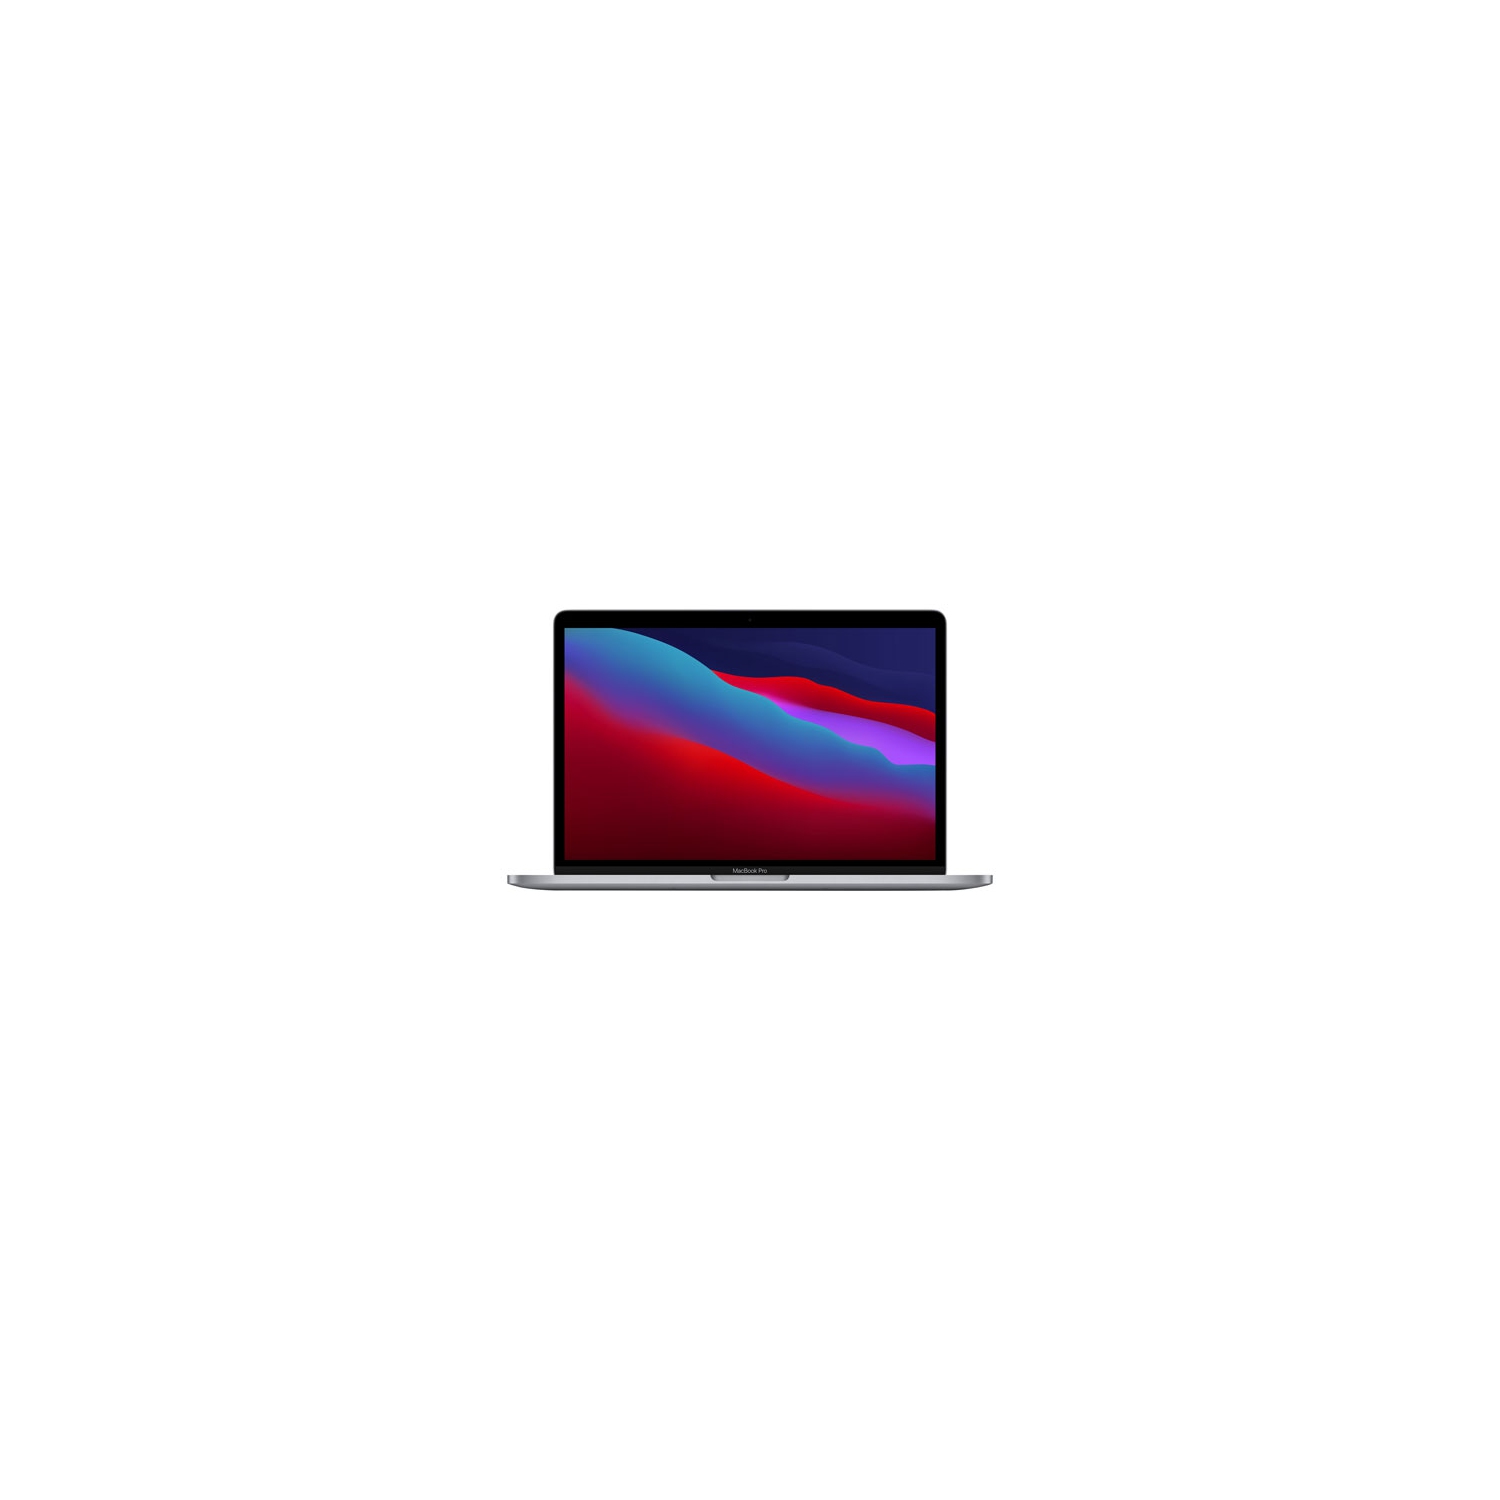 Refurbished (Fair) - Apple MacBook Pro 13.3" w/ Touch Bar (Fall 2020) - Space Grey (Apple M1 Chip / 256GB SSD / 8GB RAM) - En